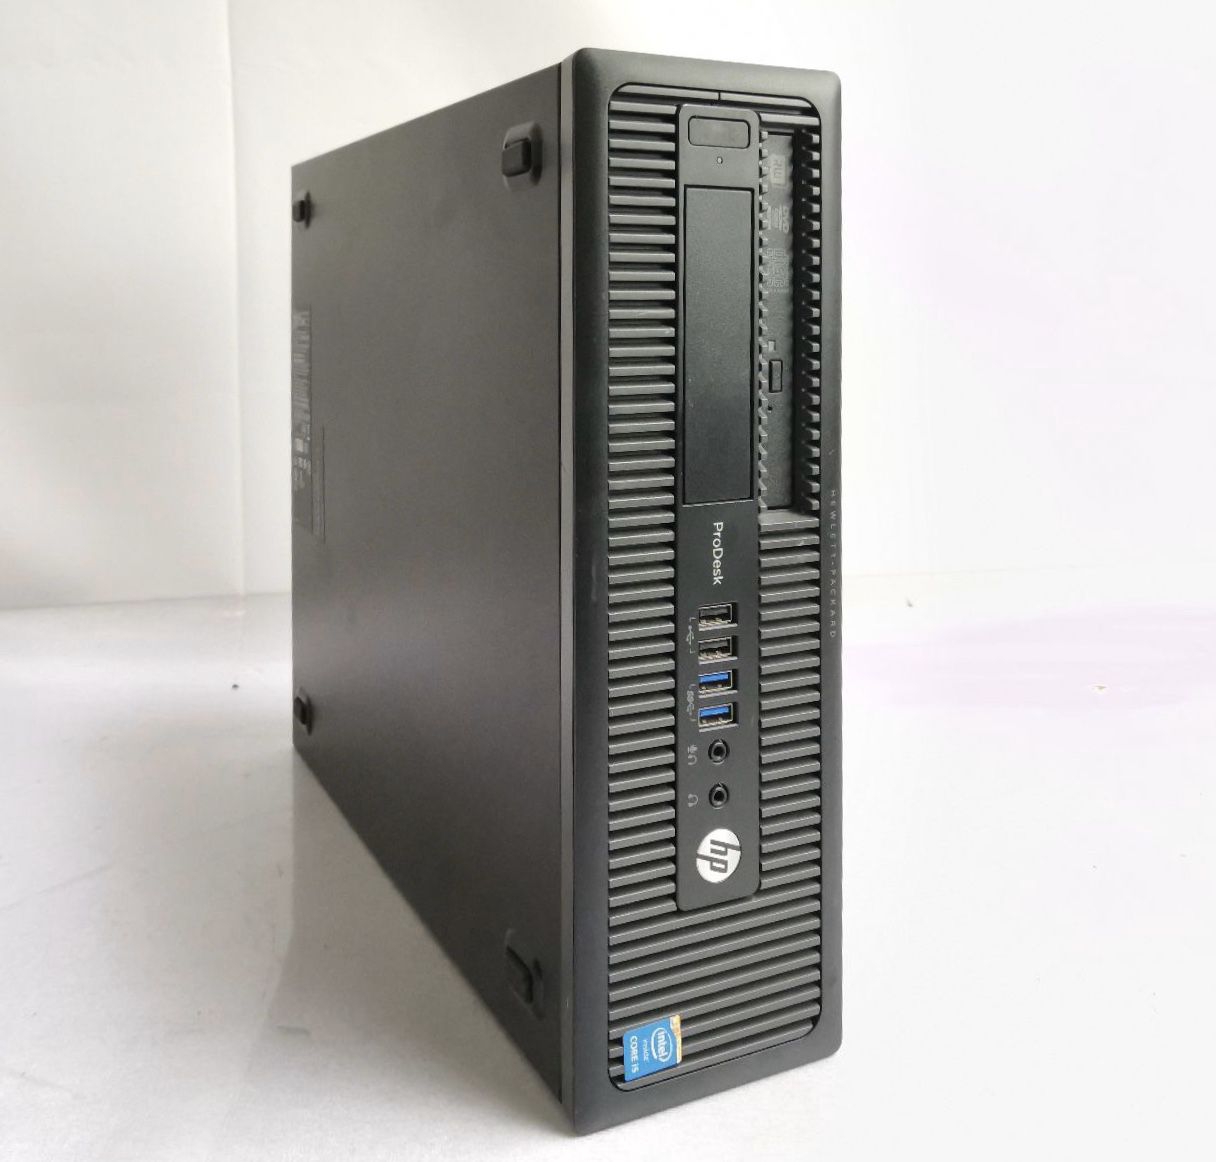 HP PRODESK 600 G1 with Intel Quad Core i5-4590, 8GB RAM, 256GB SSD Computer PC Desktop